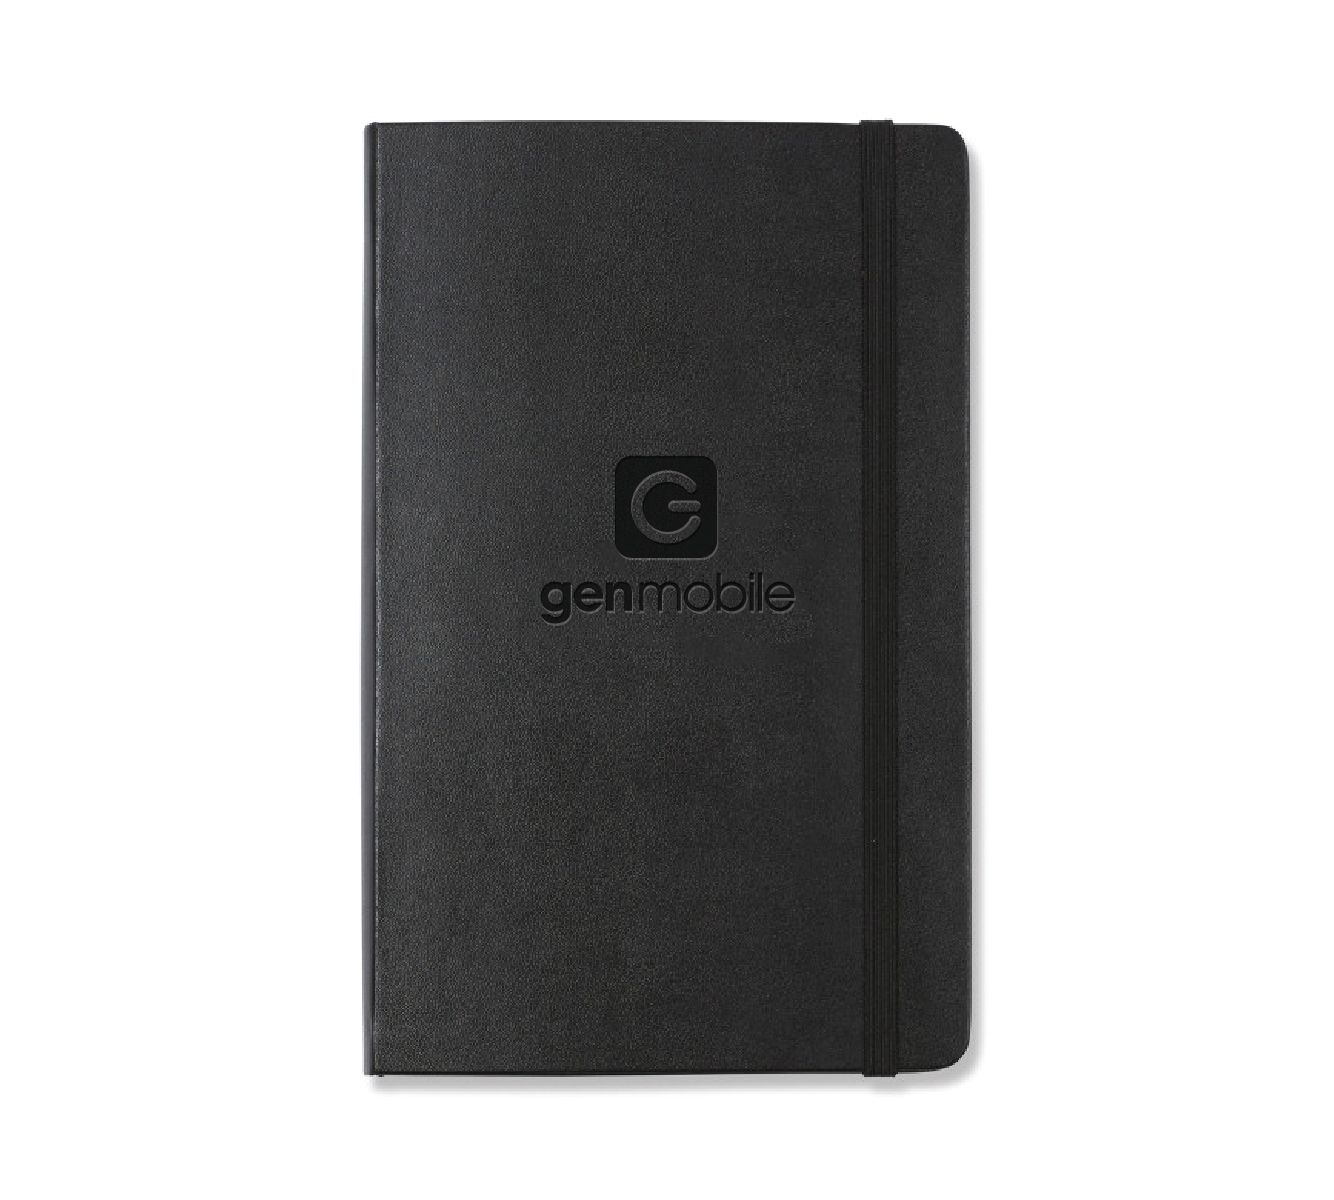 Moleskine Hard Cover Ruled Large Notebook with Gen Mobile Logo